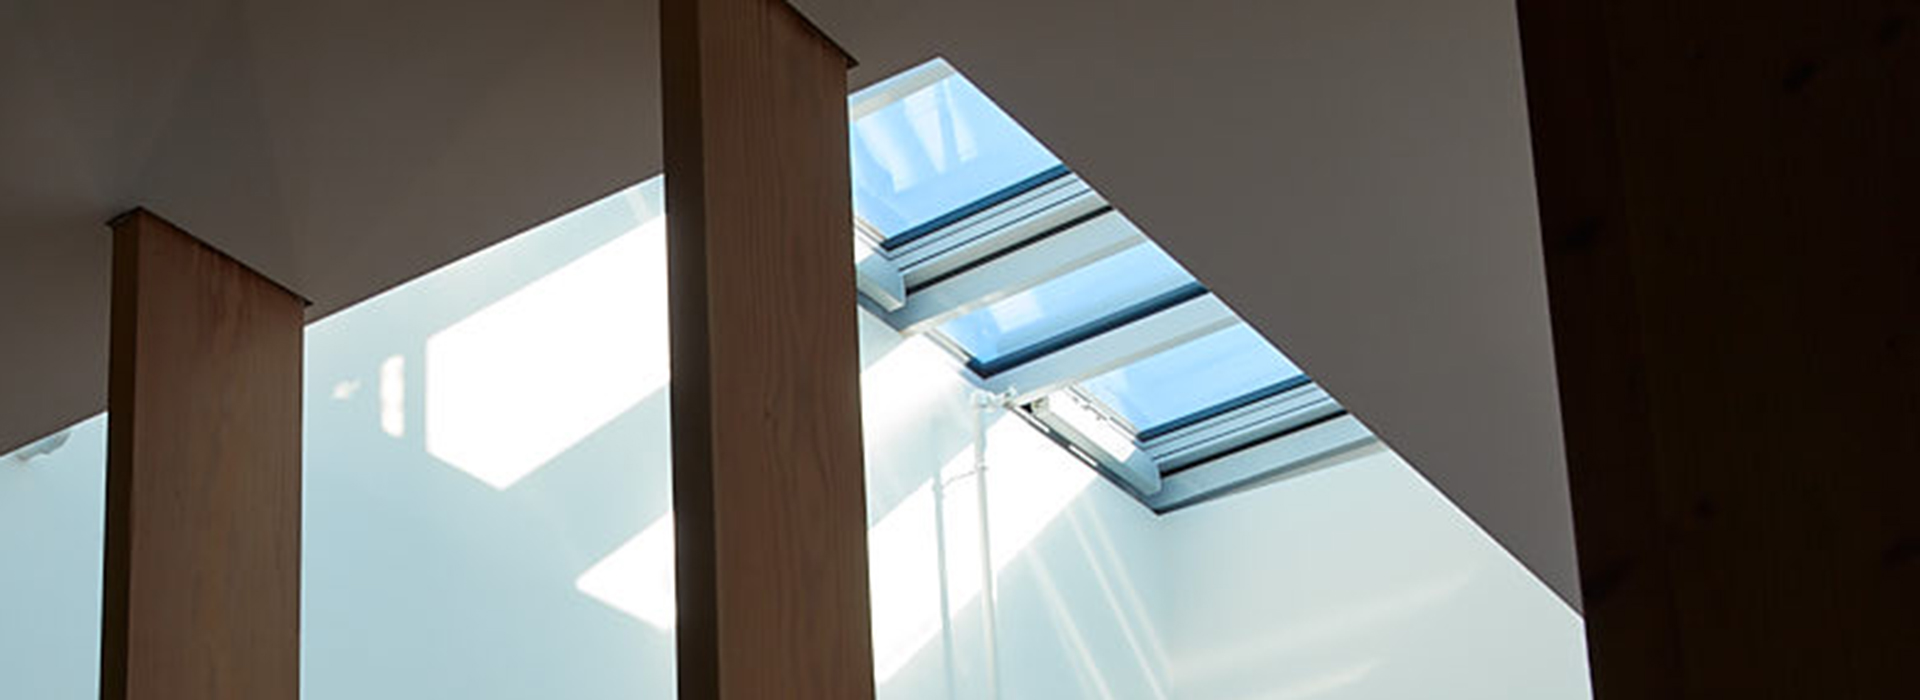 internal view of skylight